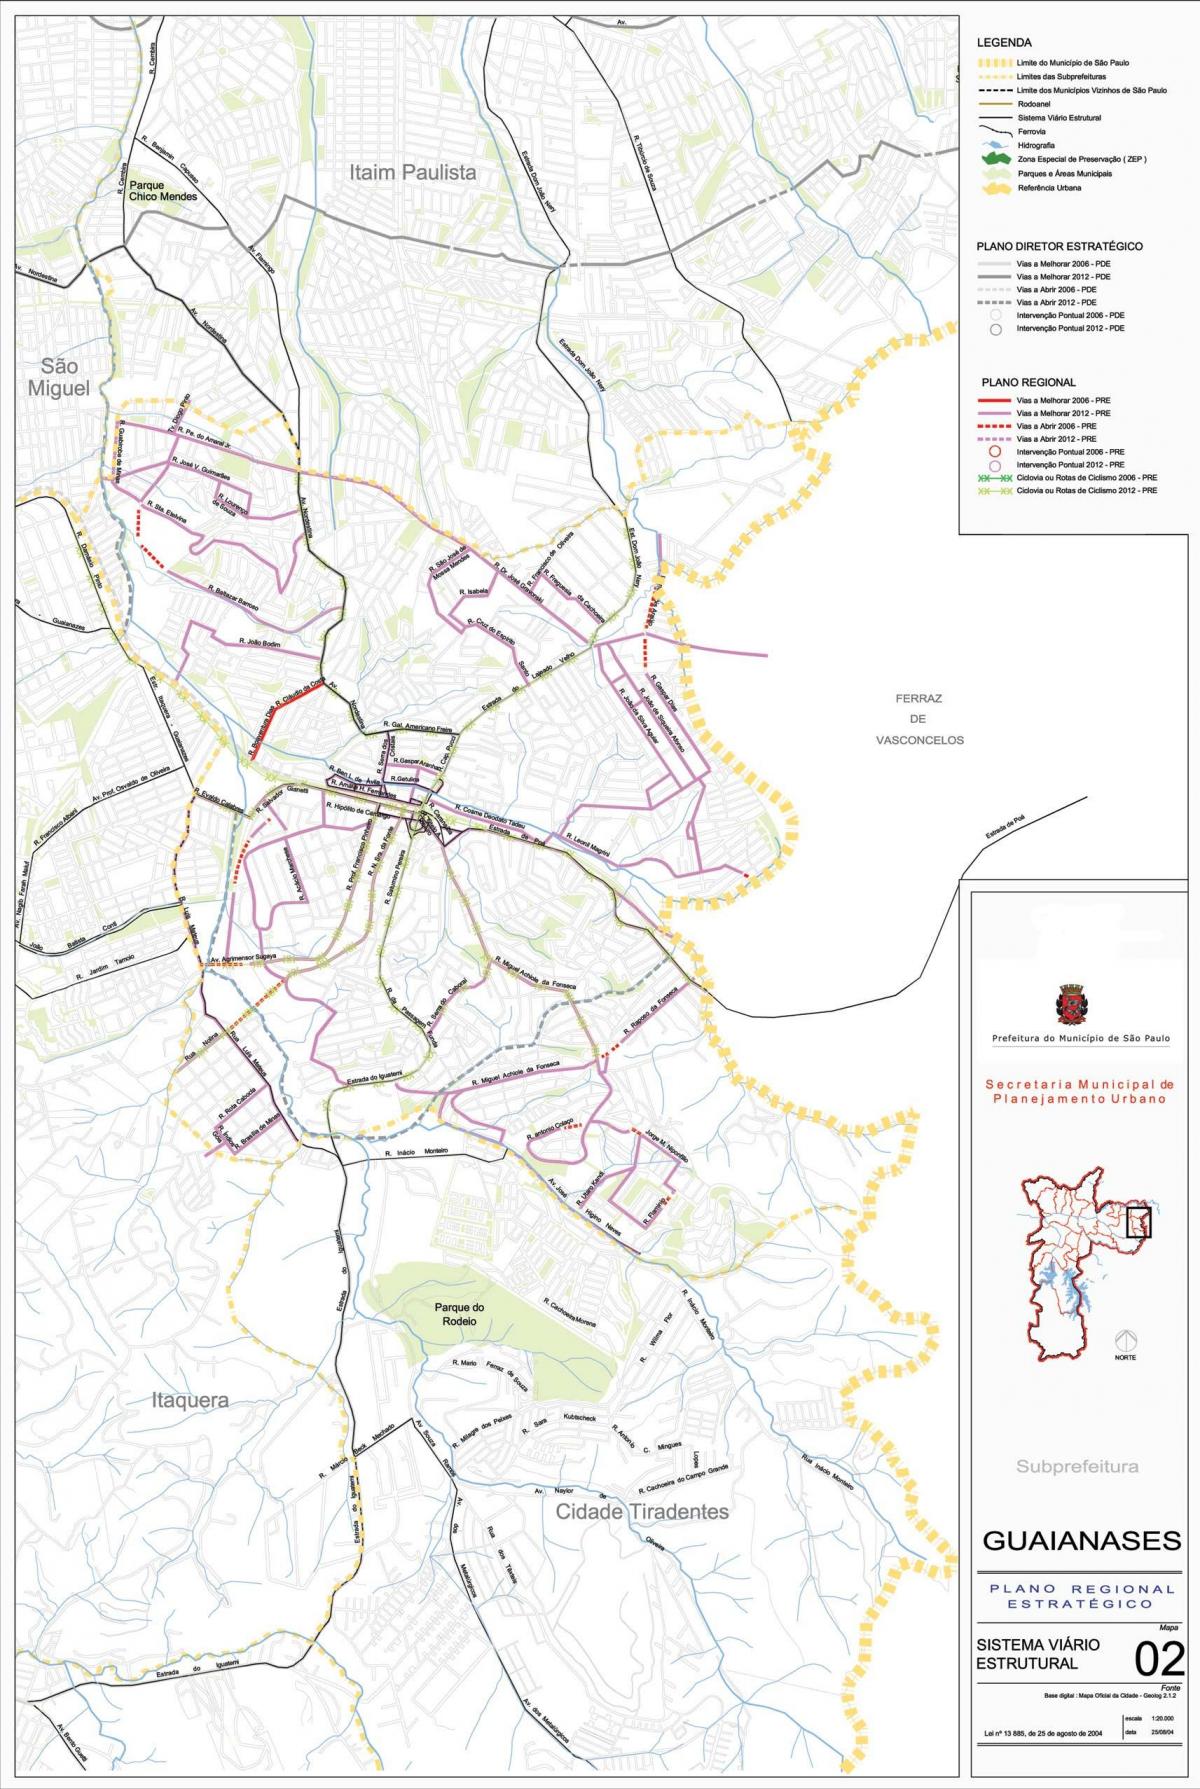 Kort over Guaianases São Paulo - Veje